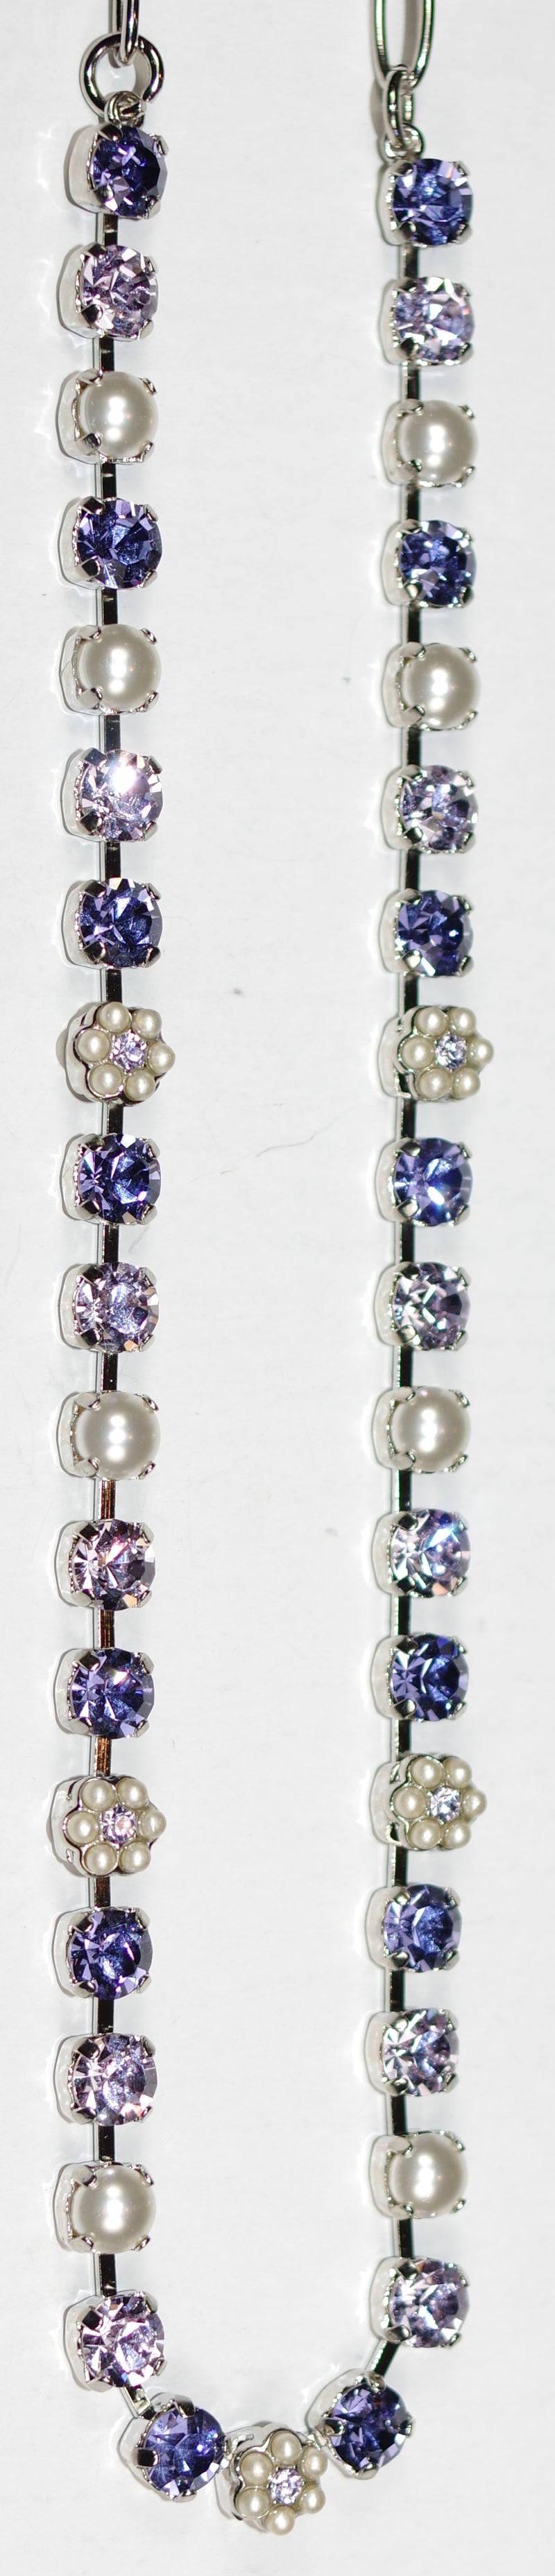 MARIANA NECKLACE ROMANCE: purple, pearl 1/4" stones in silver rhodium setting, 18" adjustable chain